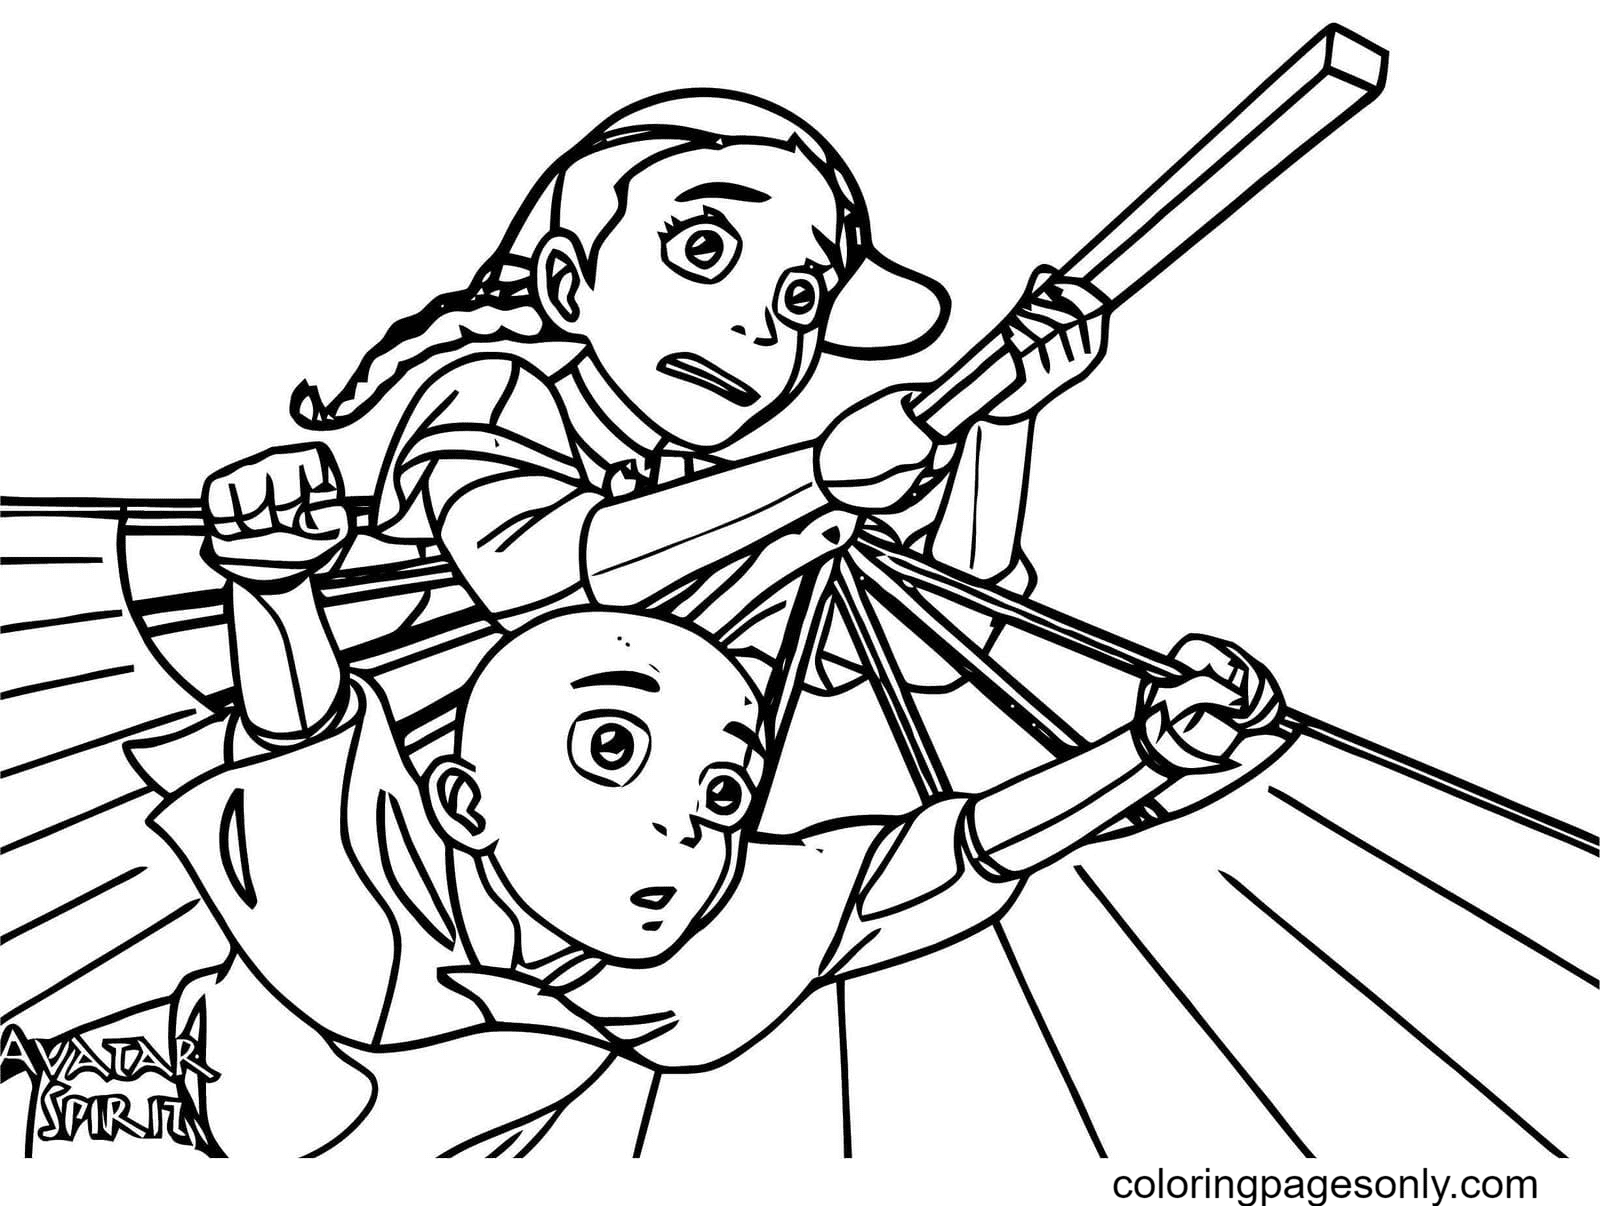 Aang and Katara in flight Coloring Pages